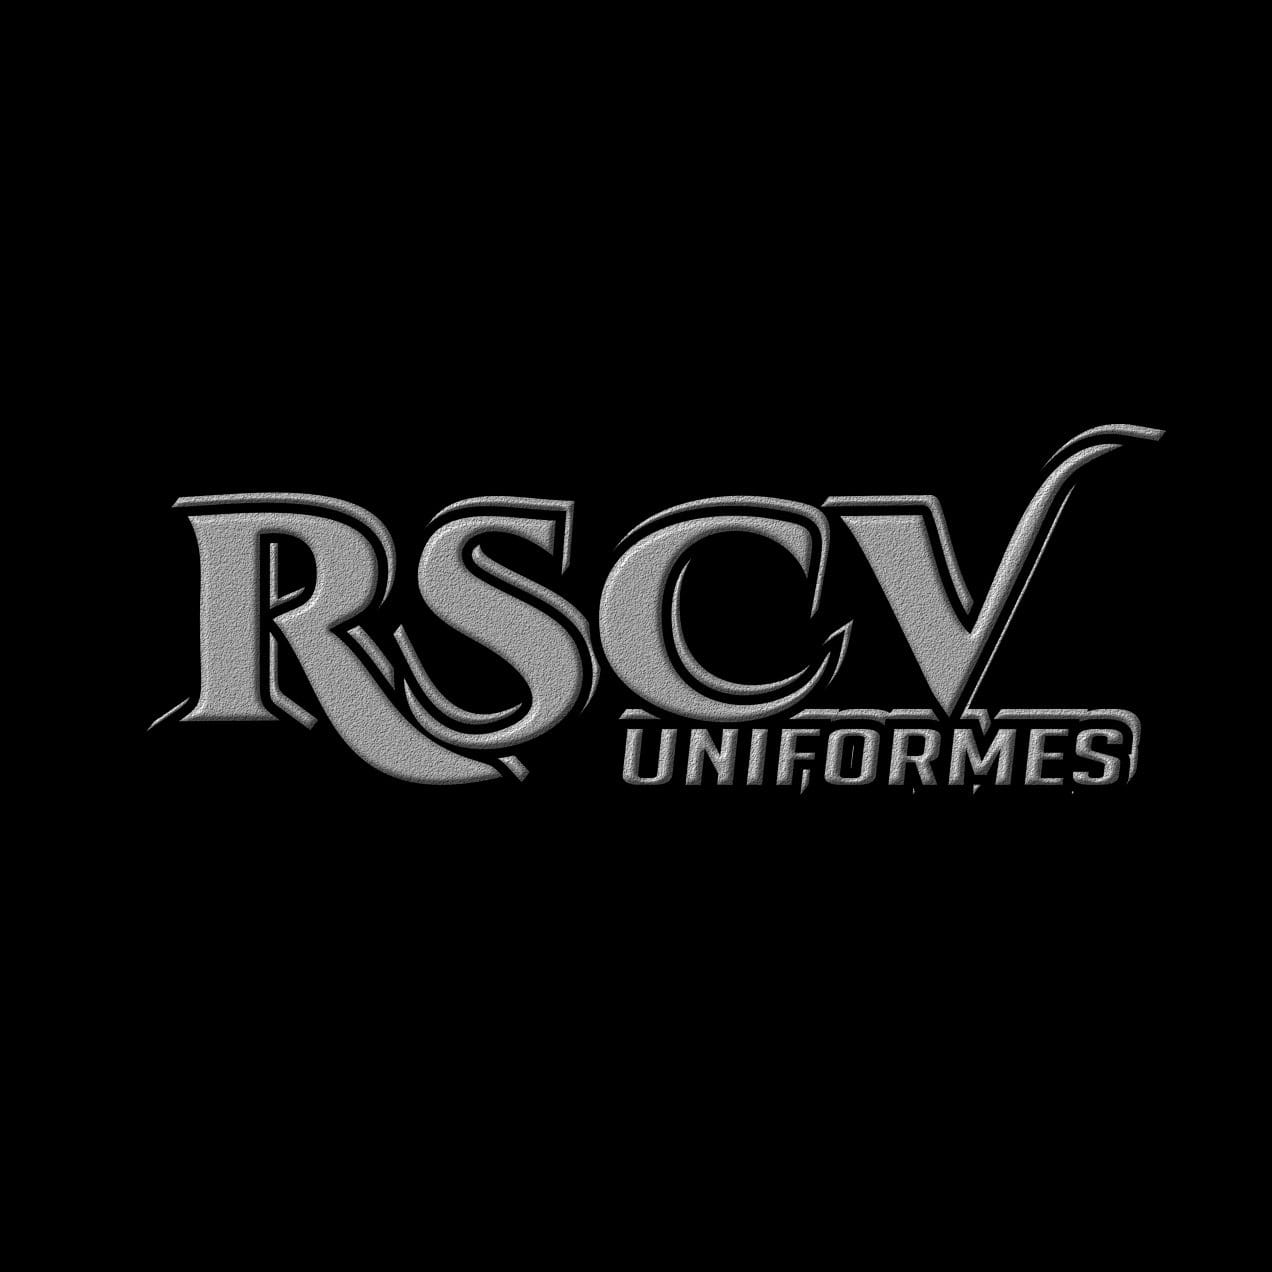 RSCV Uniformes